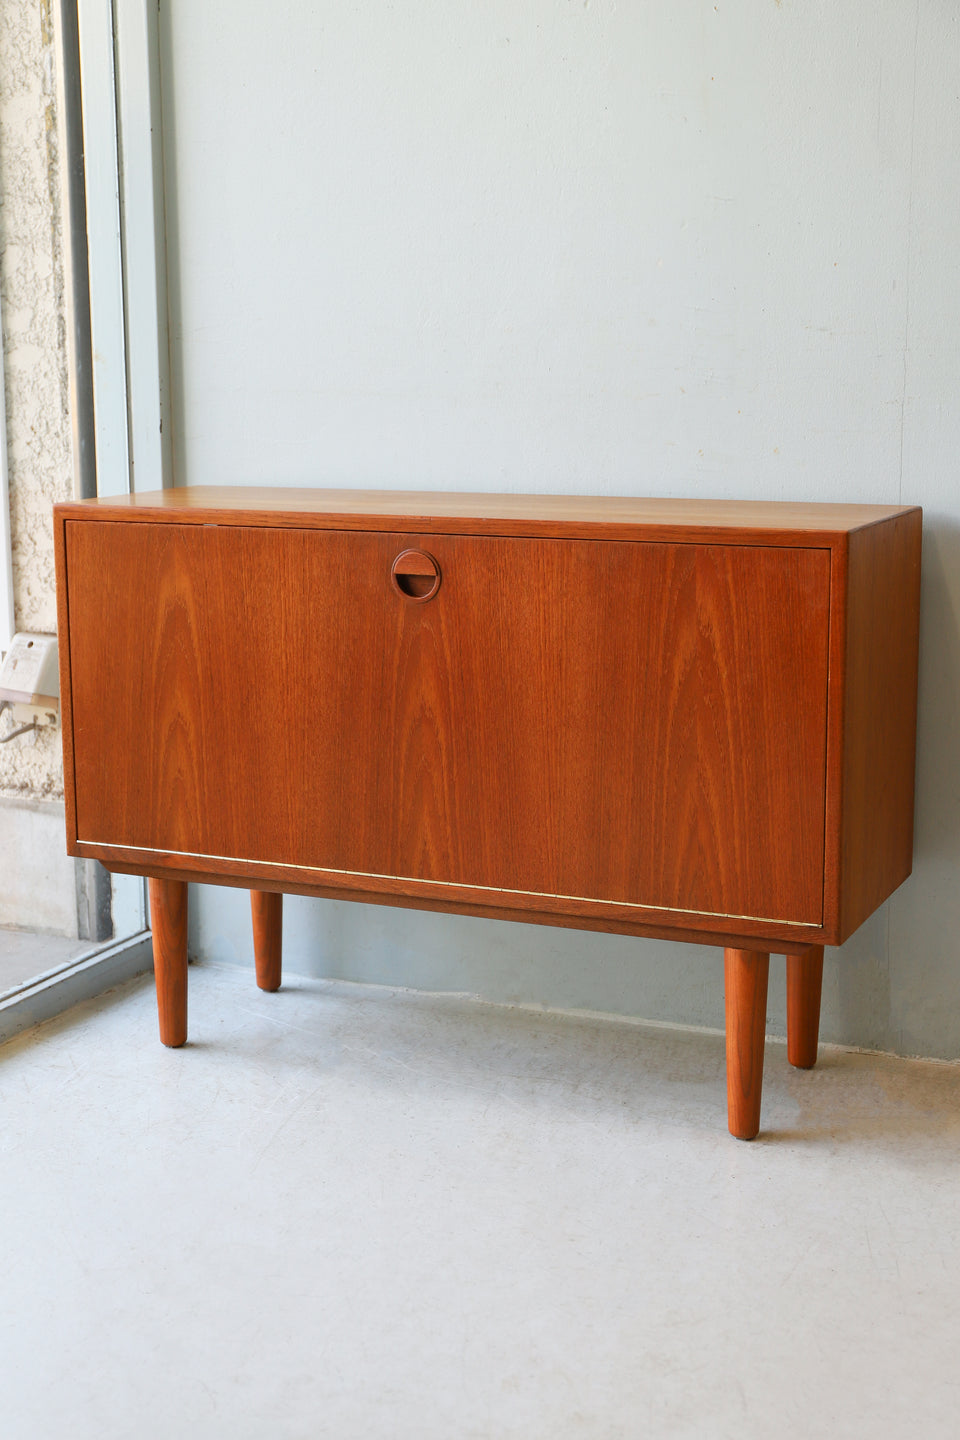 HG Møbler Small Cabinet Teakwood Danish Vintage/デンマークヴィンテージ スモールキャビネット テレビボード 北欧インテリア